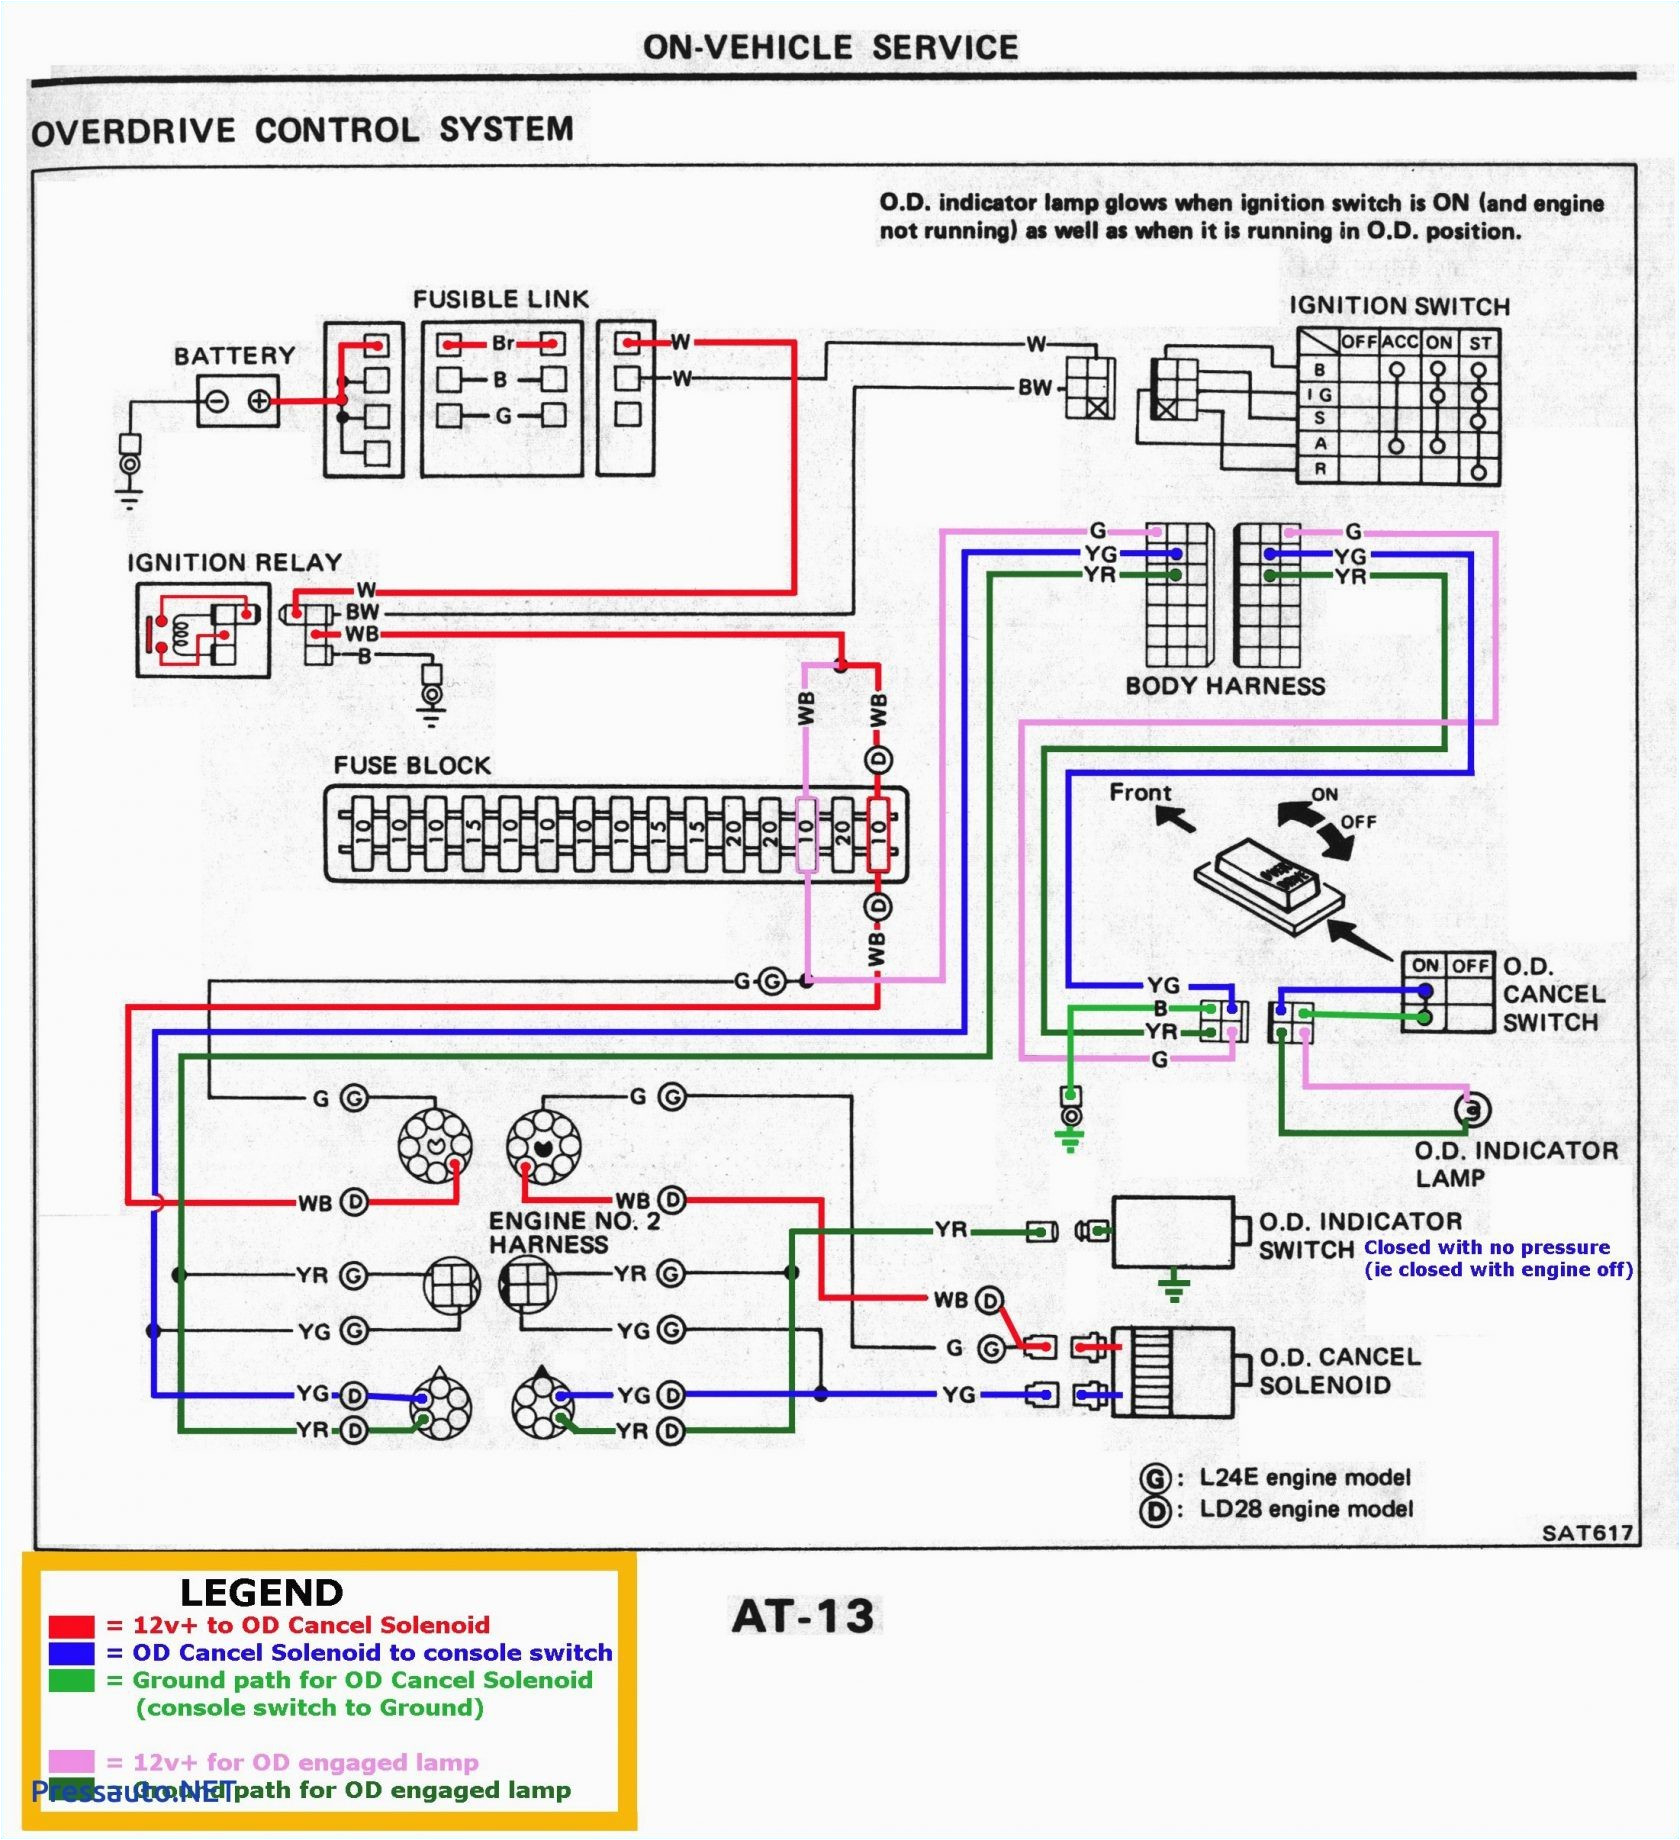 wiring diagram besides 2016 nissan altima on nissan altima radio 2003 nissan altima radio wiring diagram nissan altima radio wiring